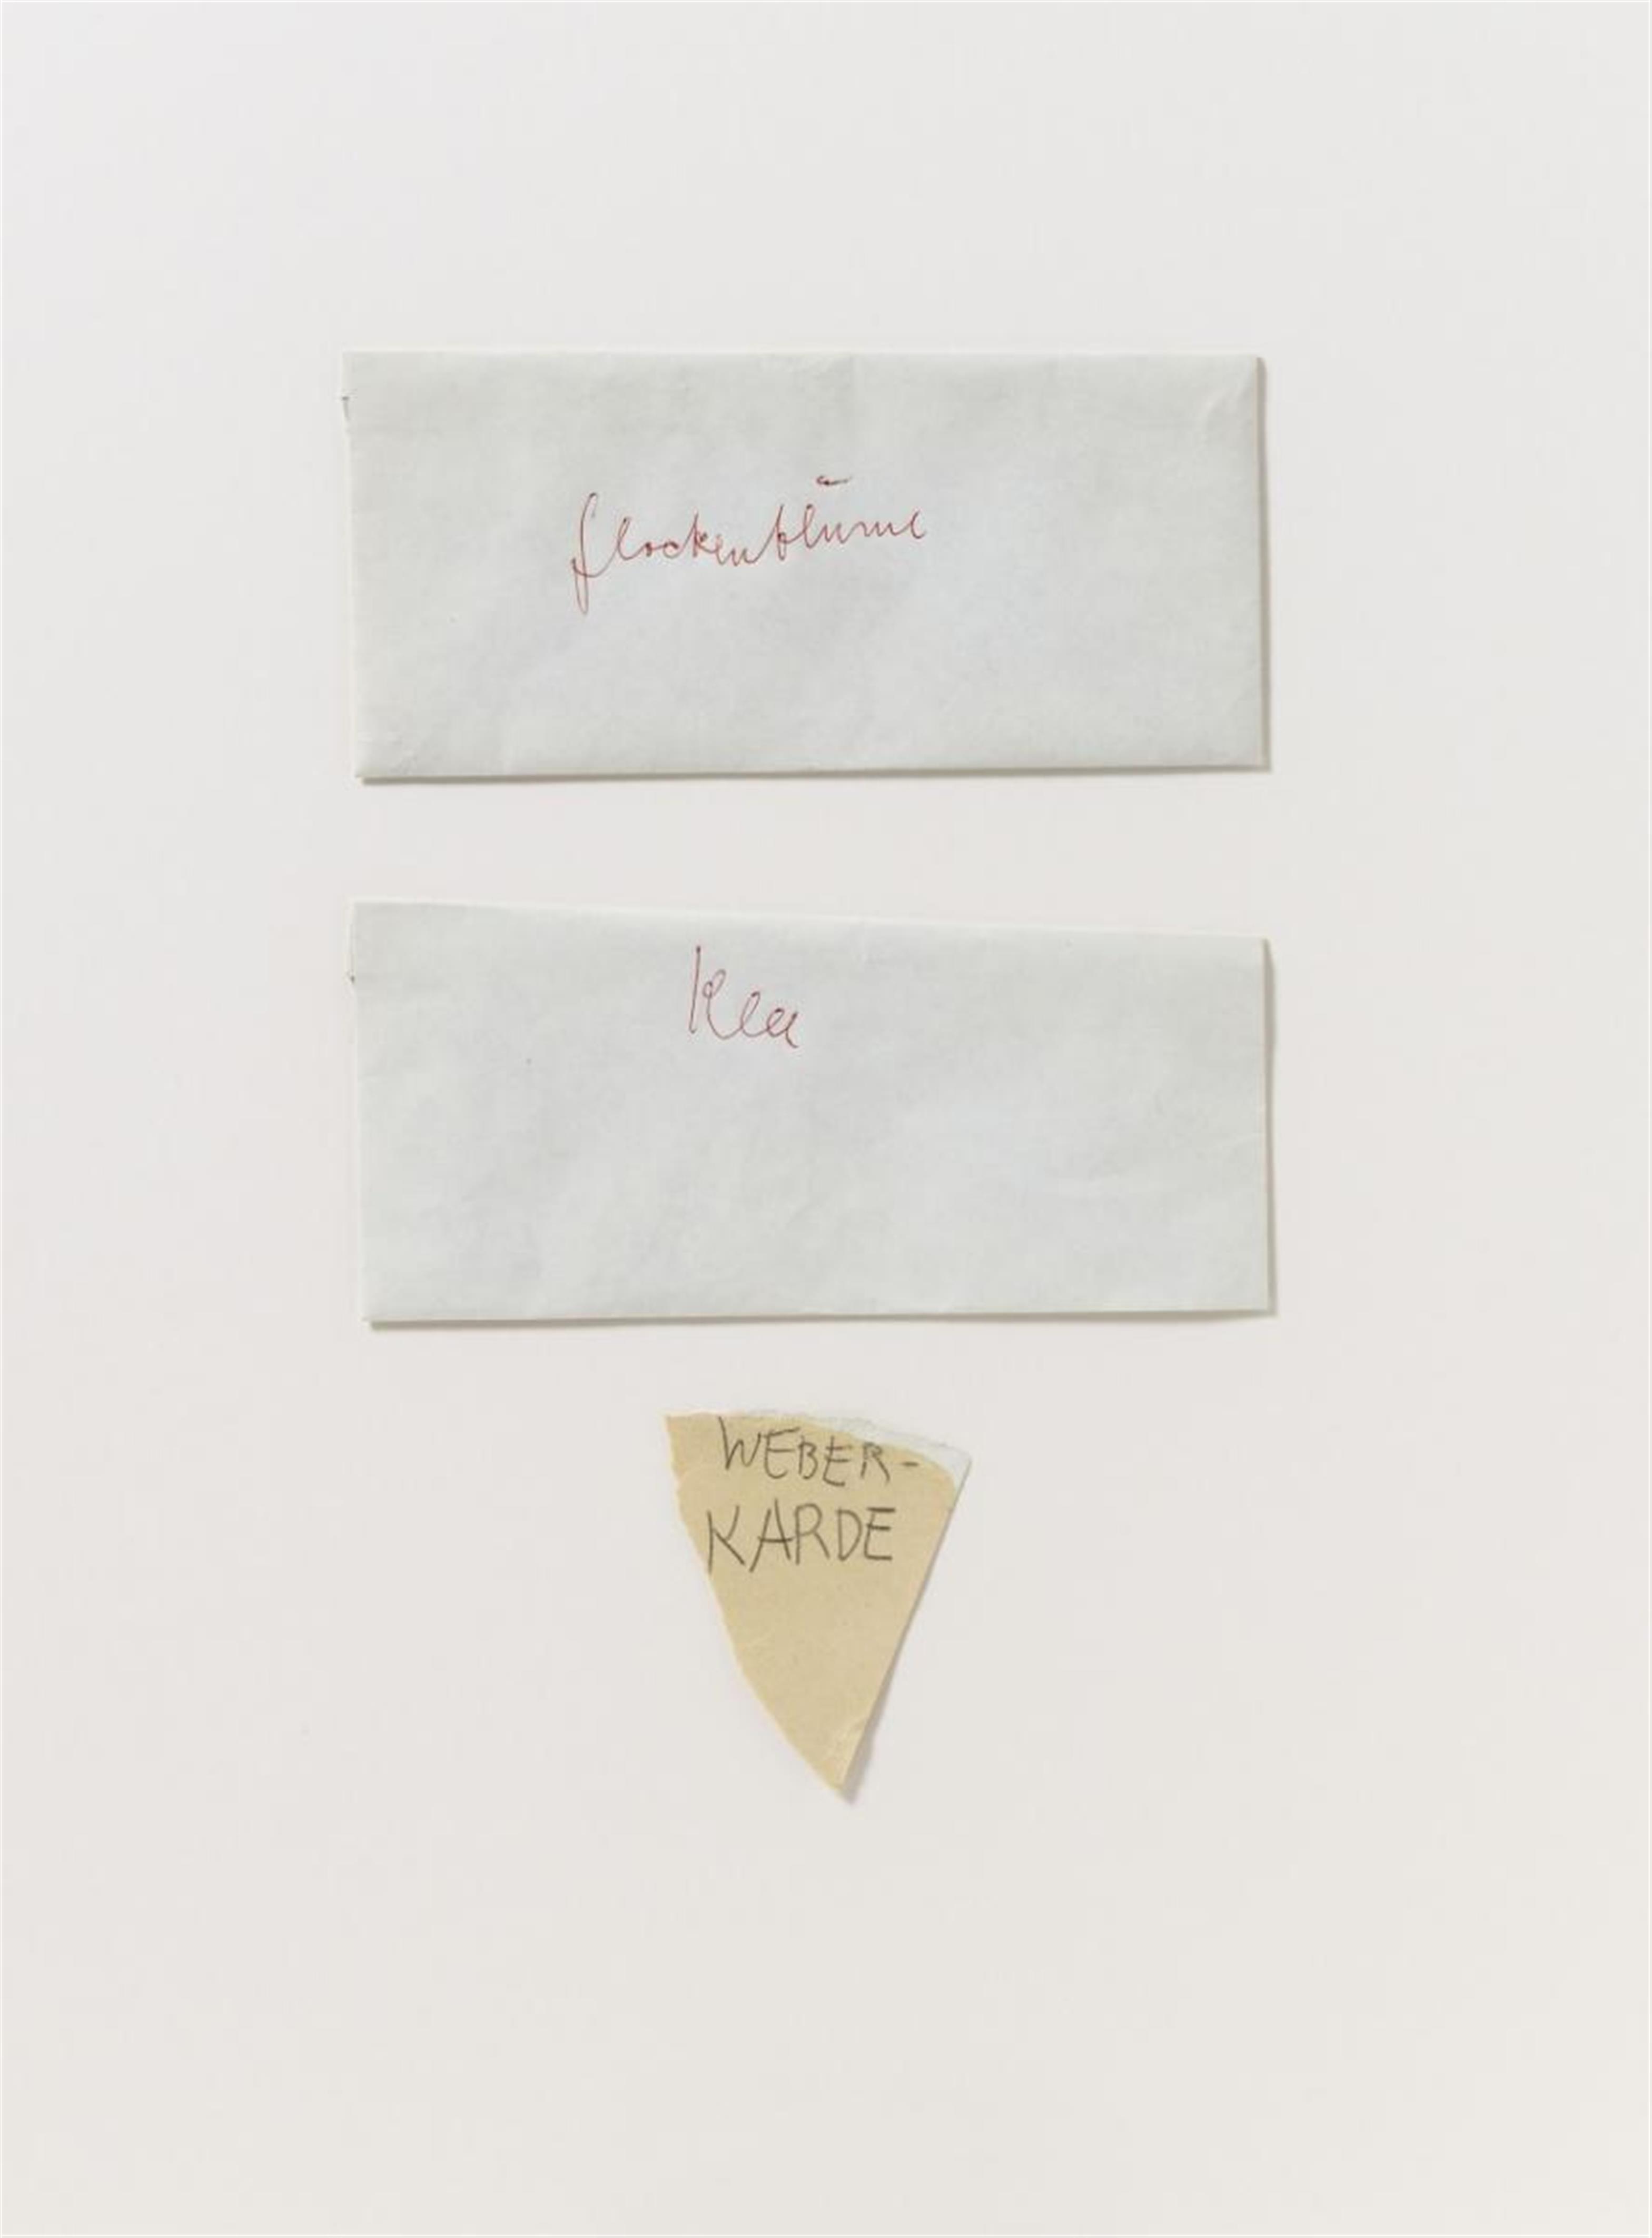 Joseph Beuys - Ohne Titel (Glockenblume, Klee, Weberkarde) - image-1